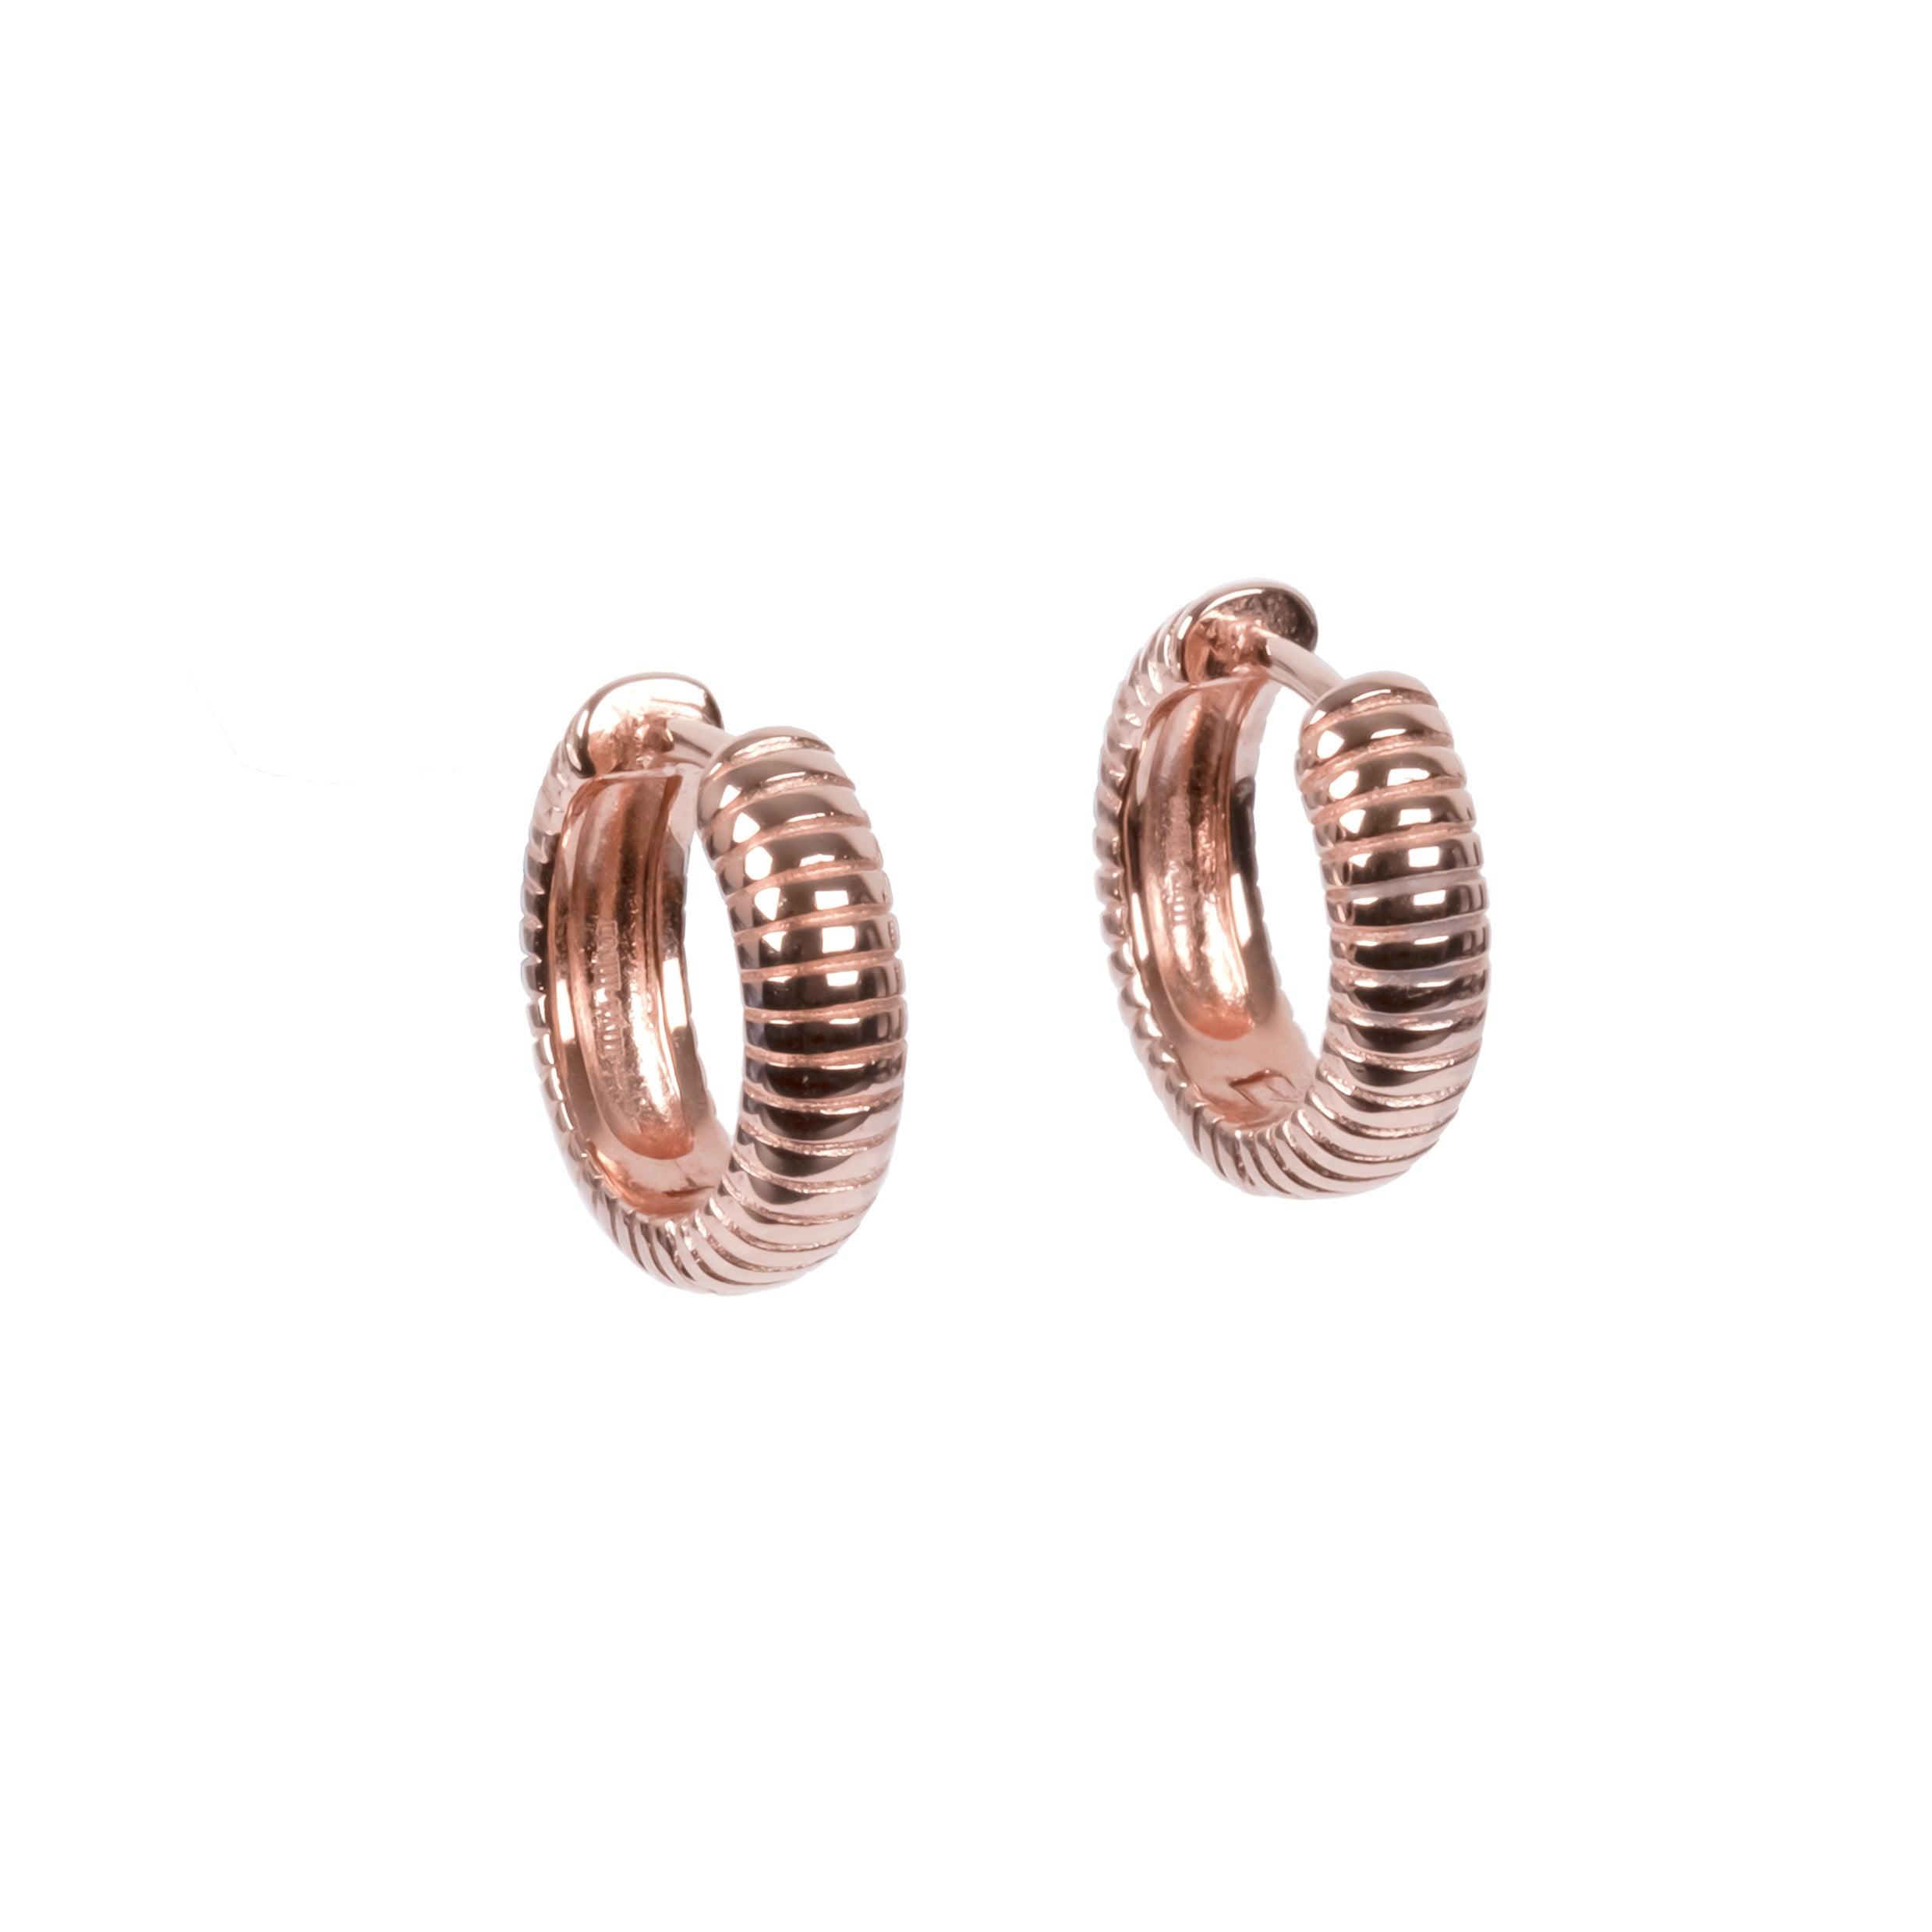 Serena Hoopy Earrings - Rose Gold and Silver - RUUD Studios